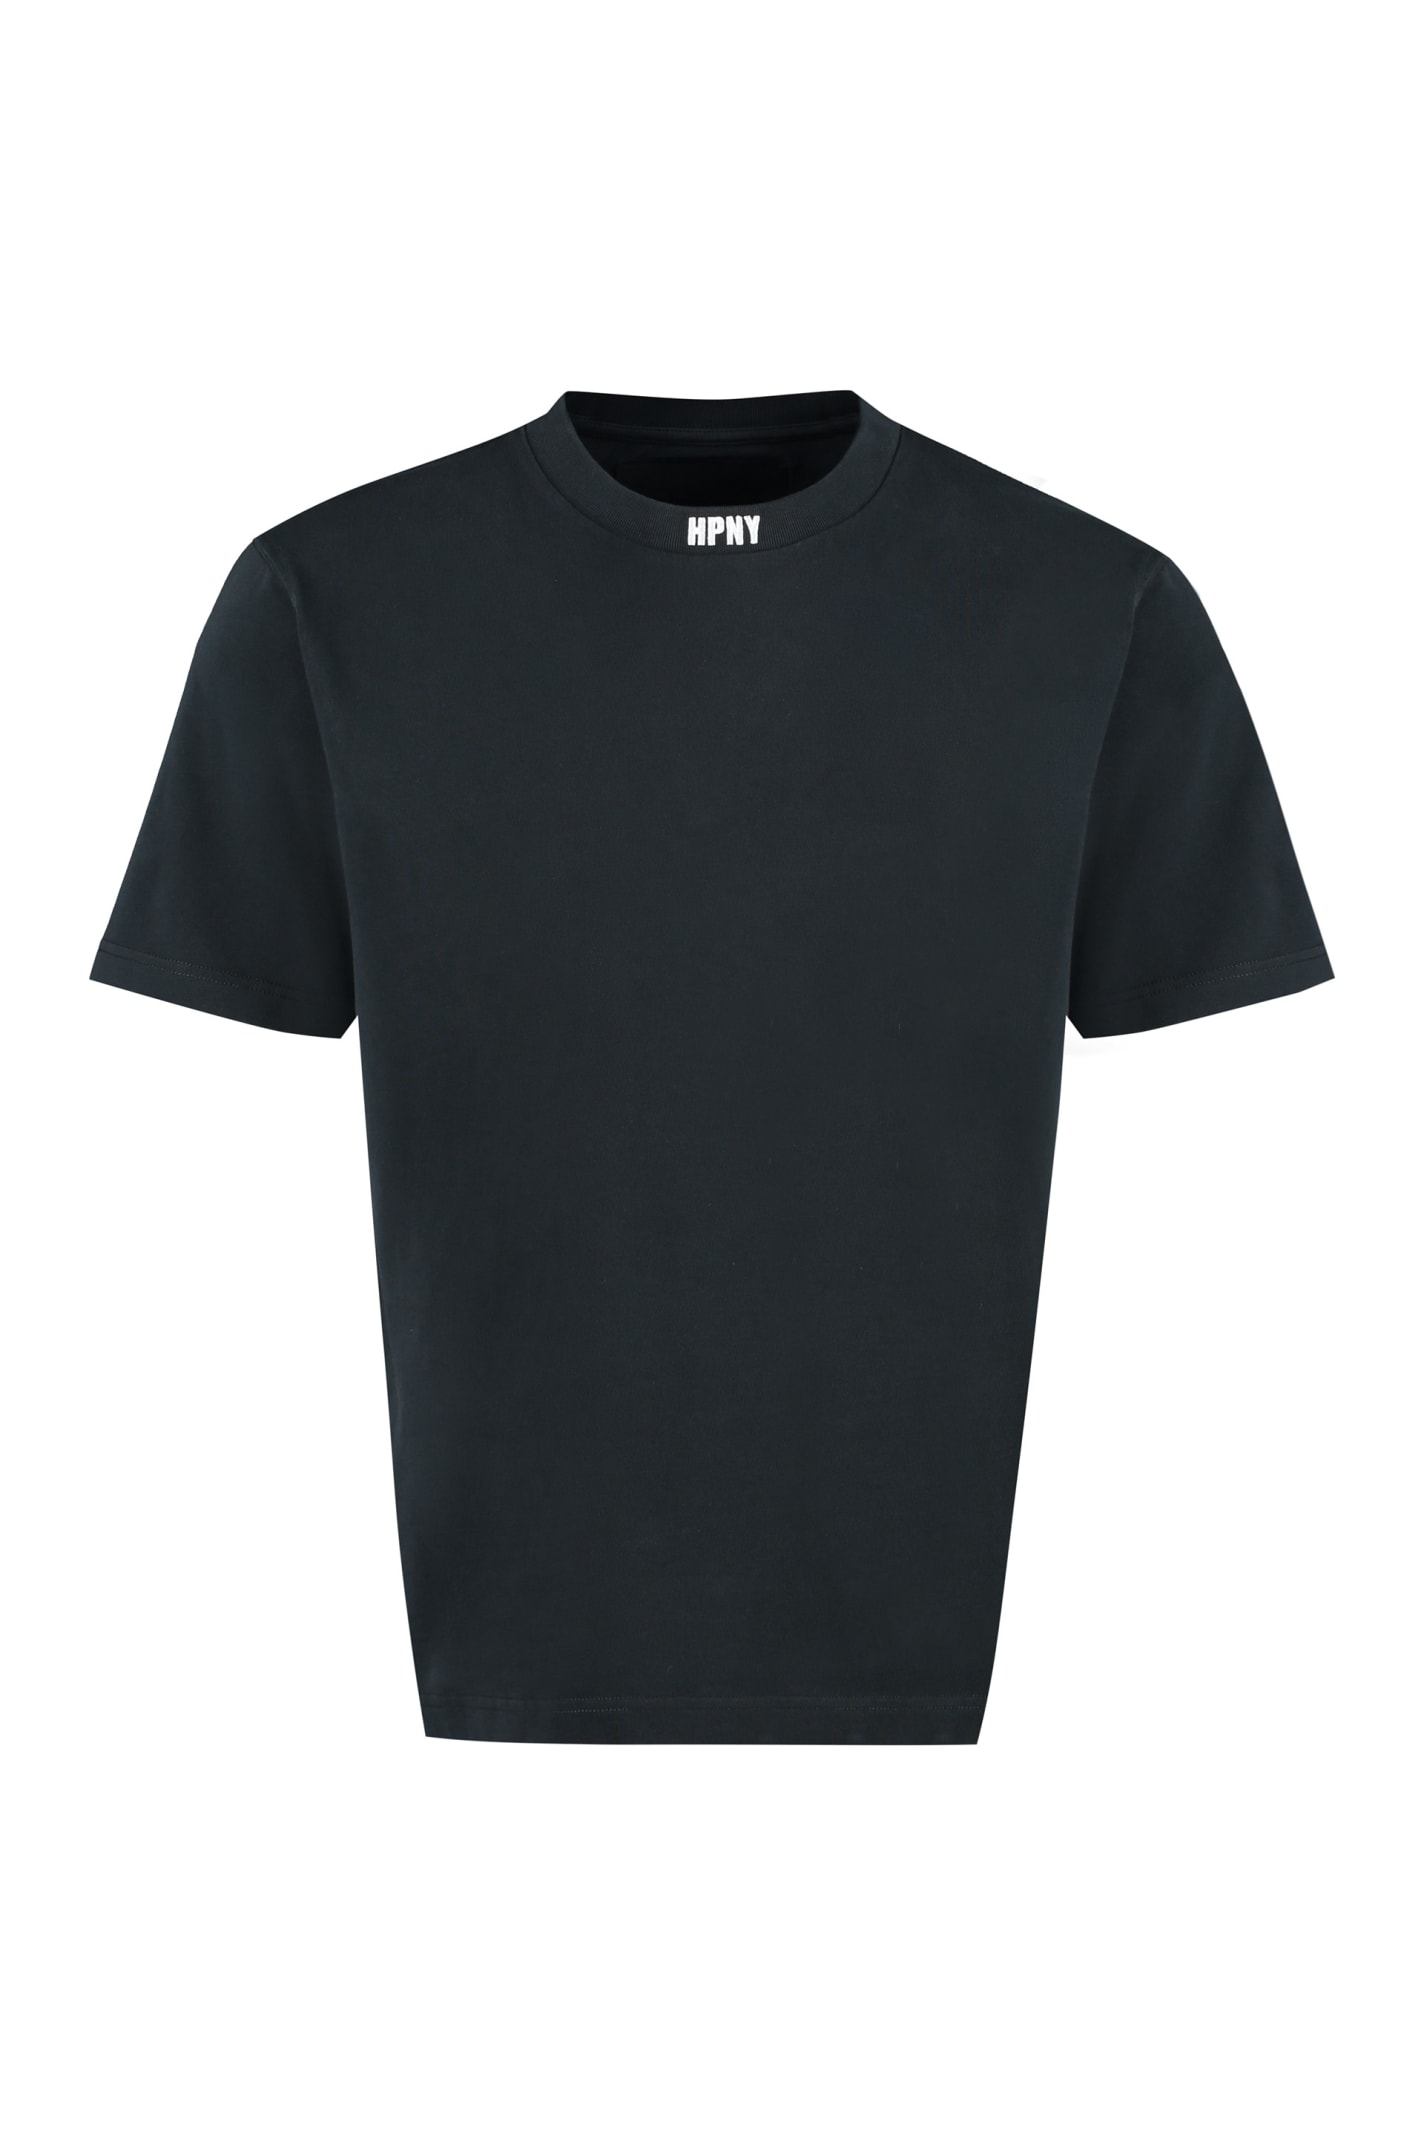 Heron Preston Cotton Crew-neck T-shirt In Black